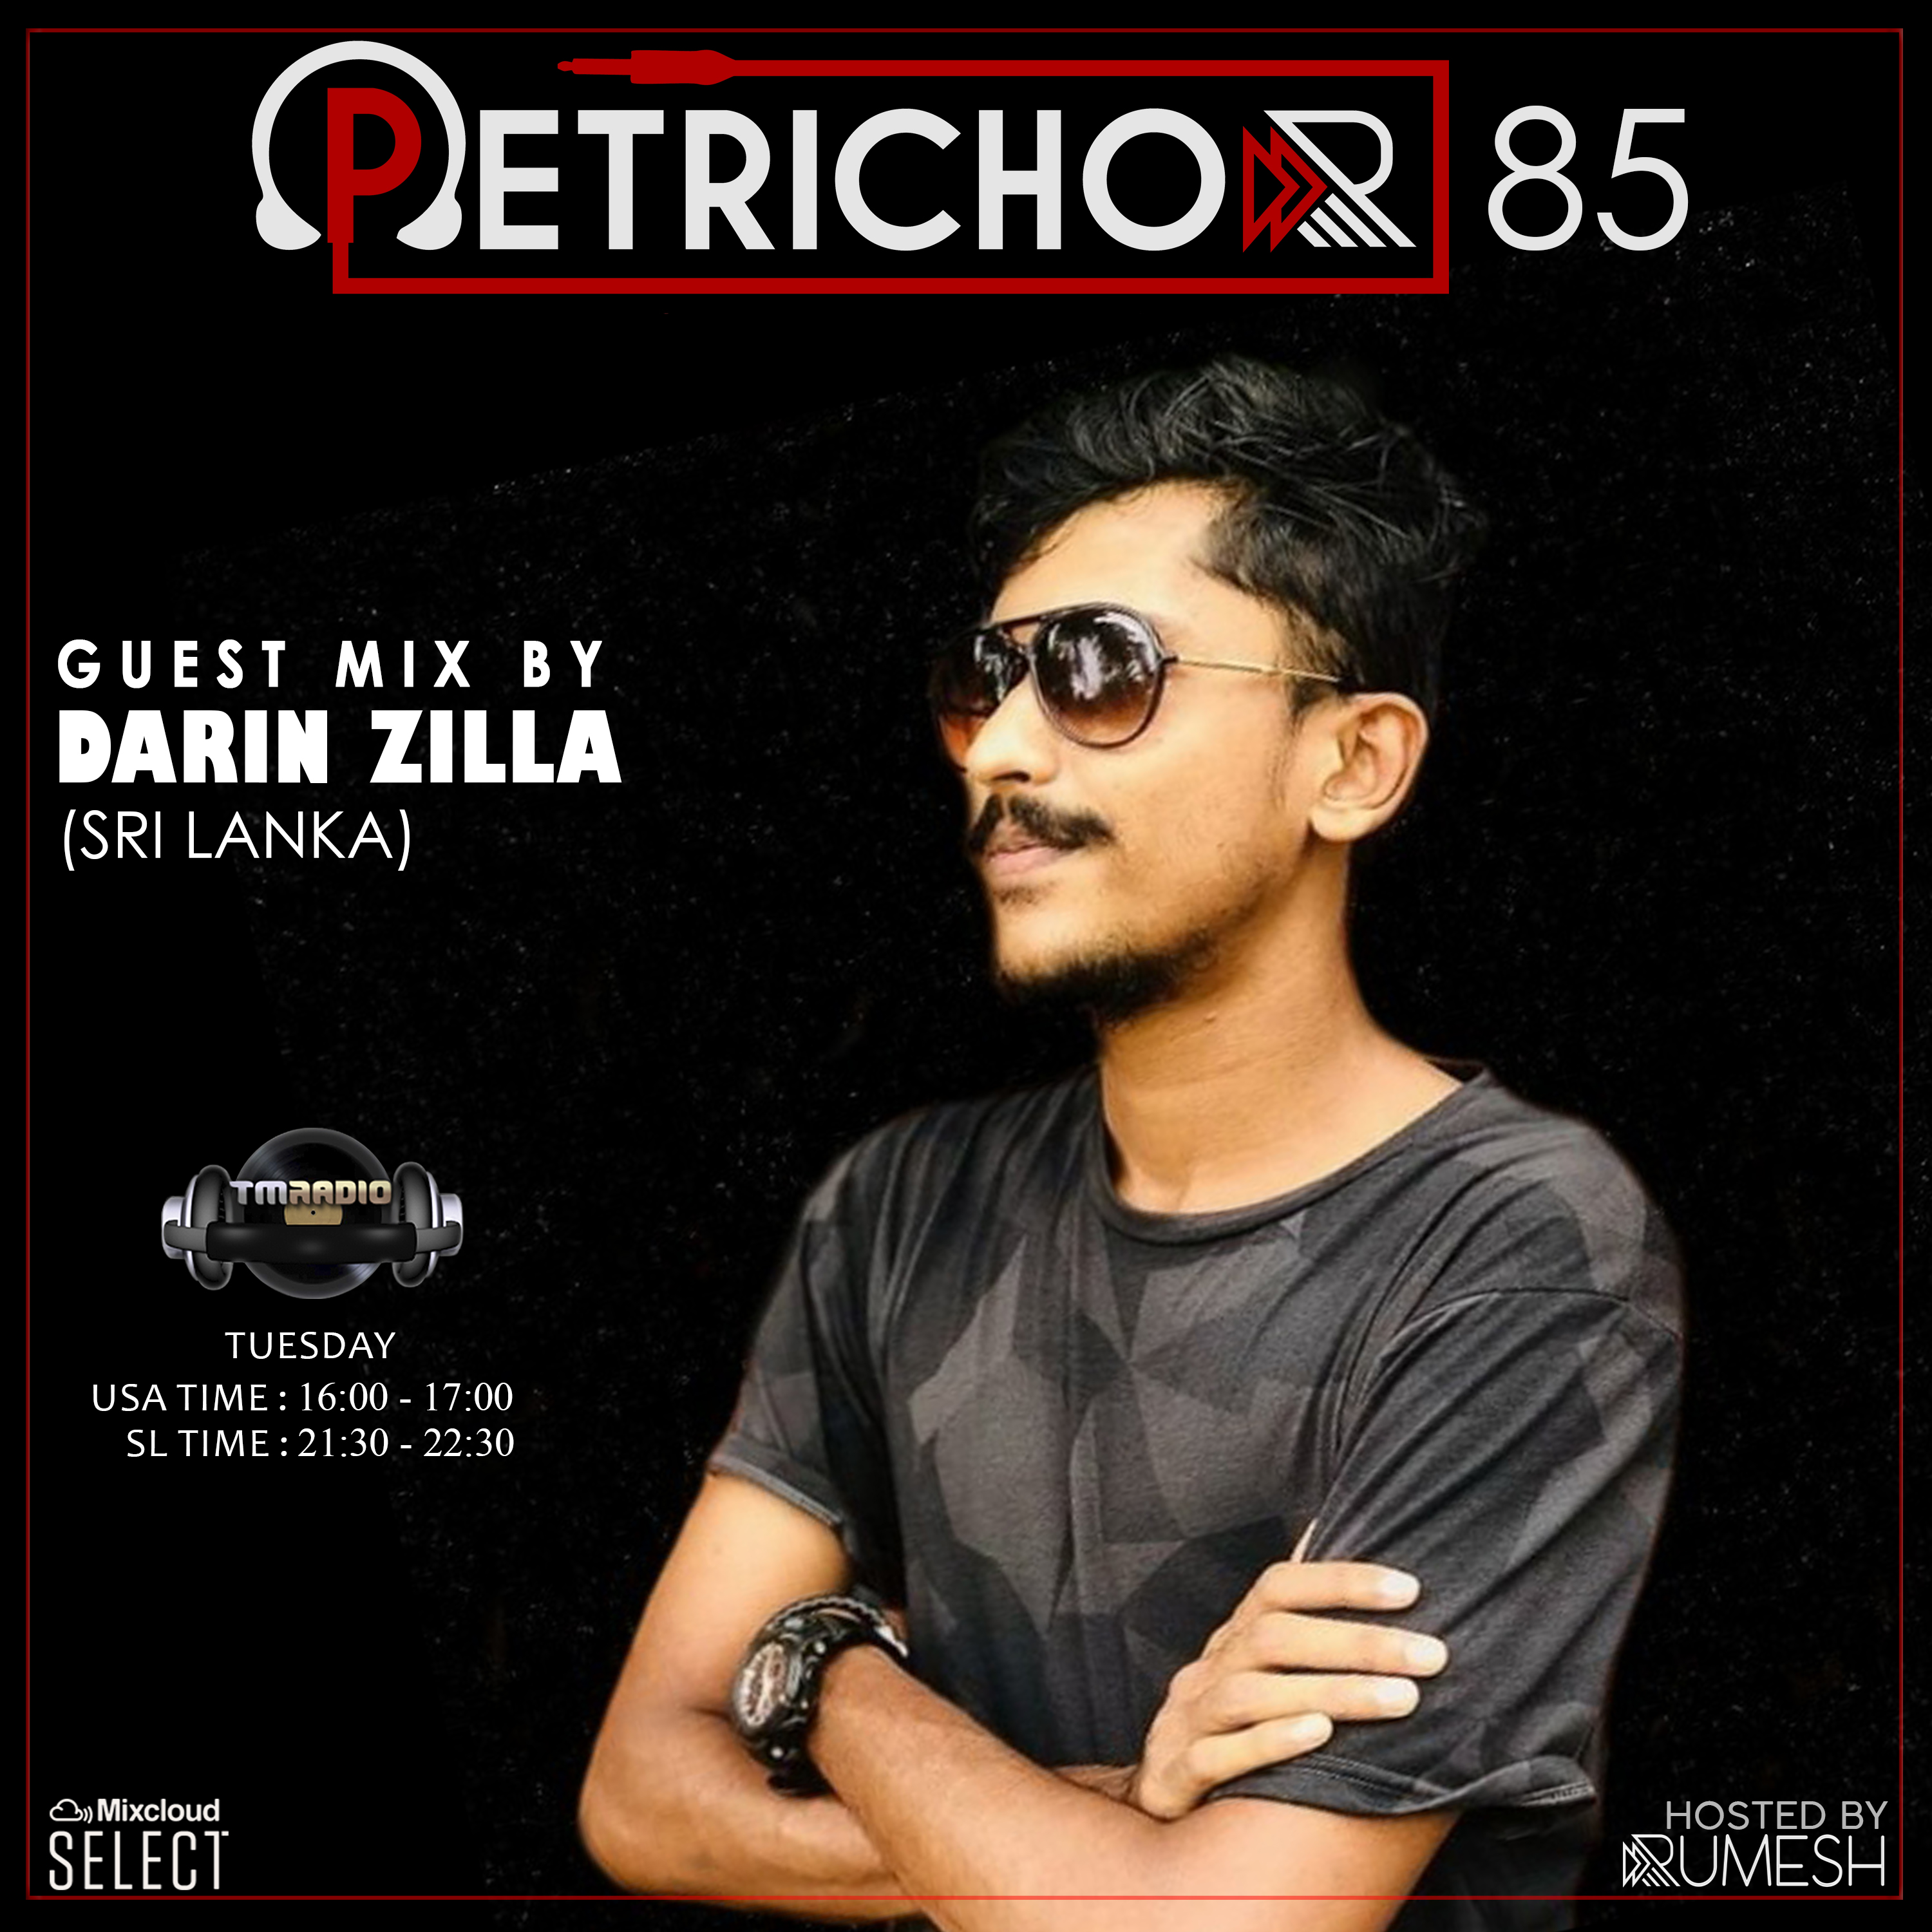 Petrichor :: Petrichor 85 guest mix by Darin Zilla - (Sri Lanka) (aired on June 23rd, 2020) banner logo